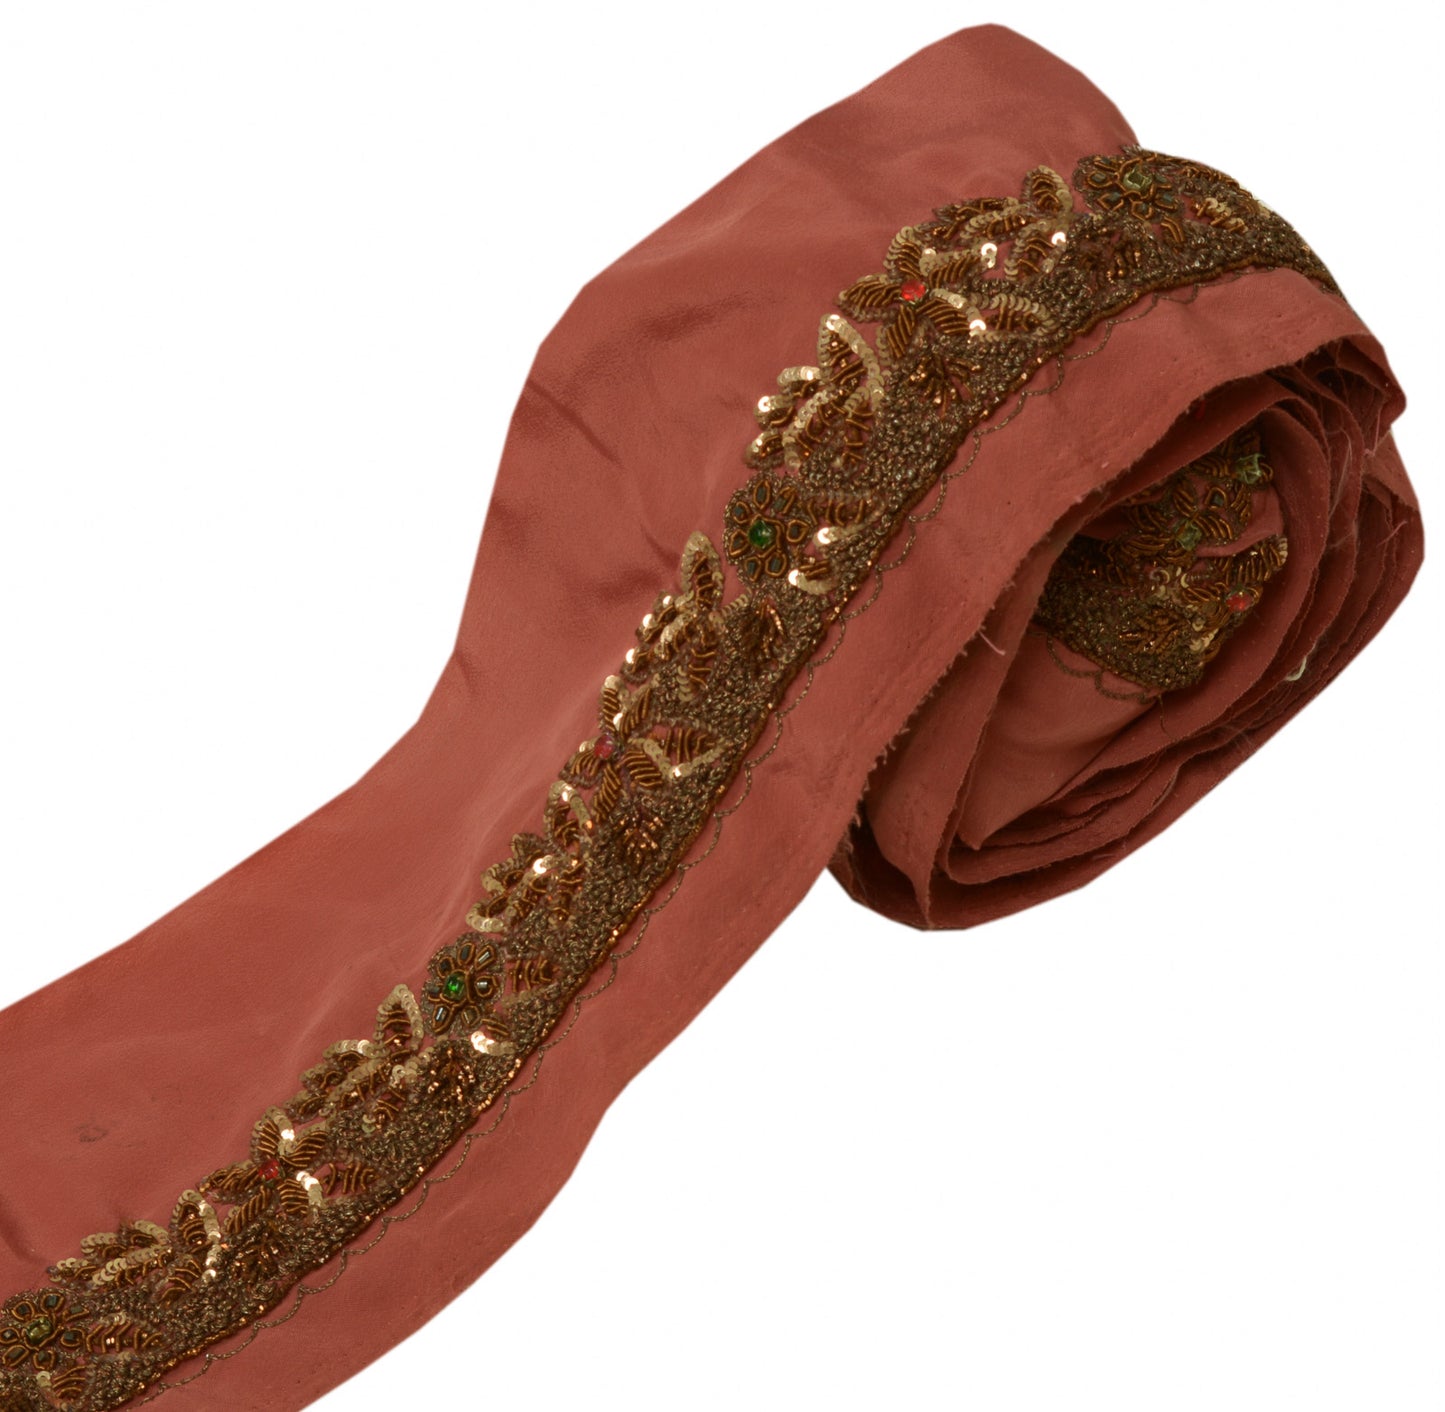 Sushila Vintage Sari Border Indian Craft Sewing Trim Hand Beaded Lace Ribbon